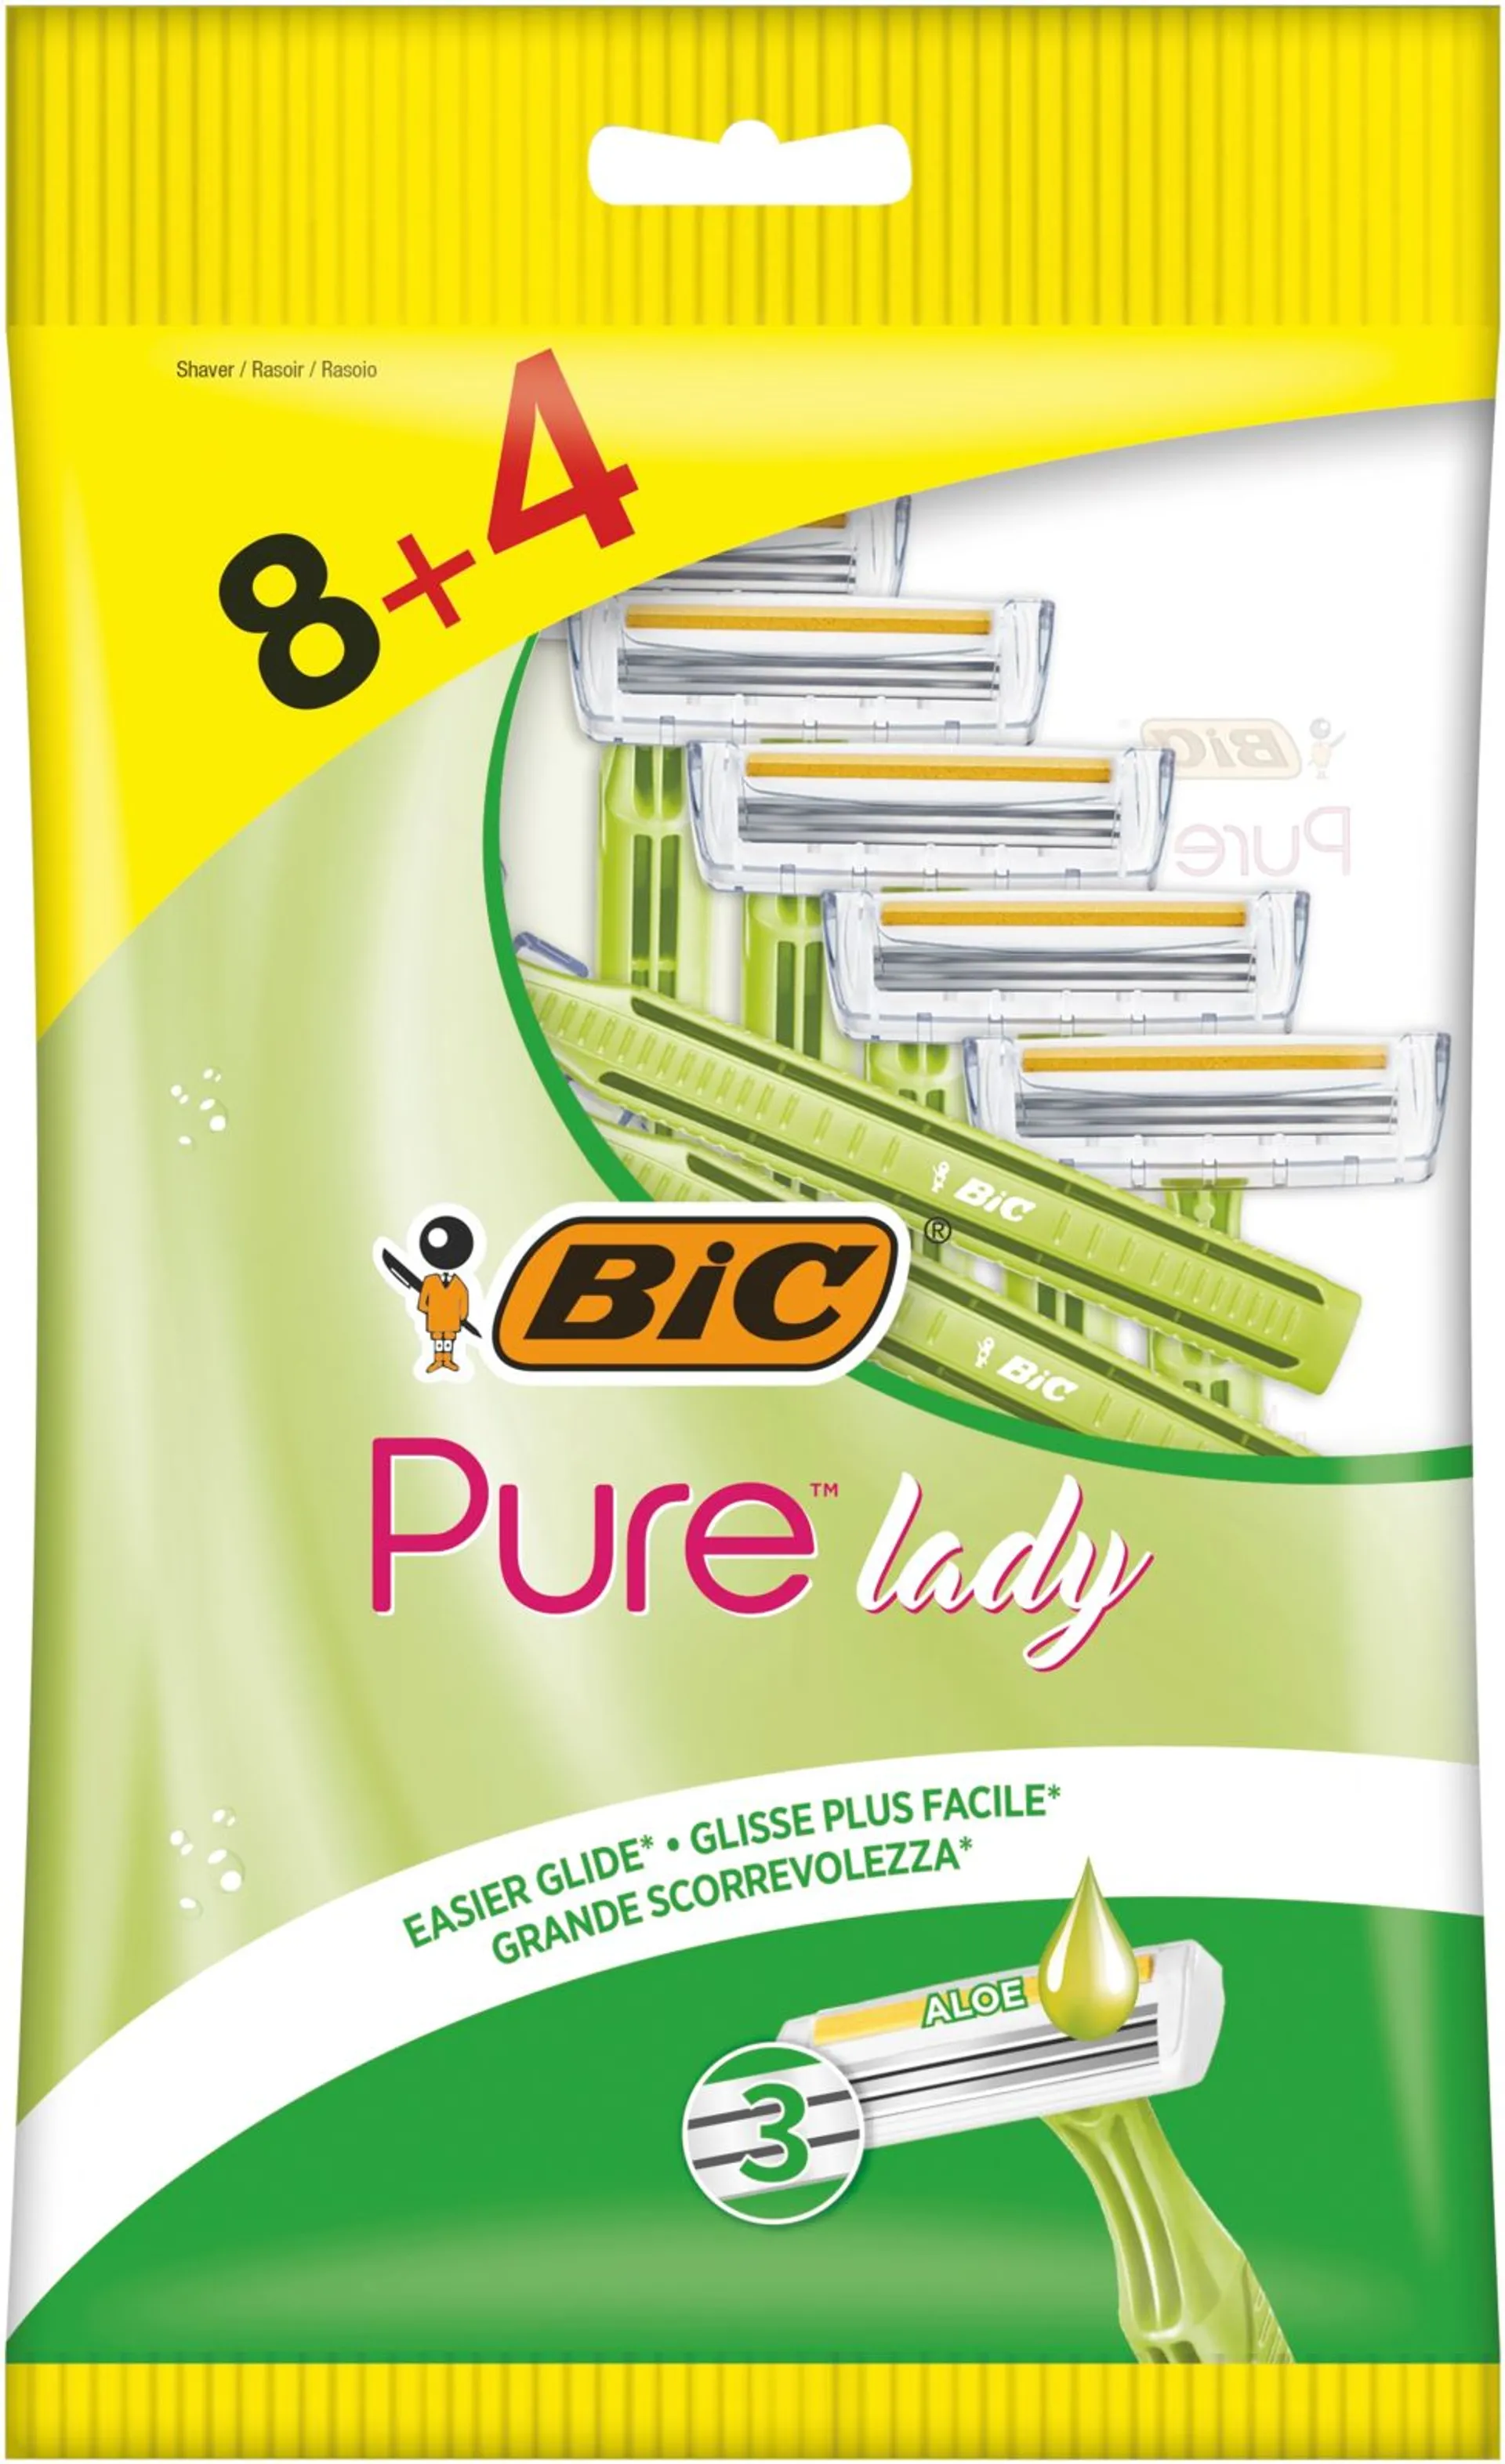 BIC varsiterä Pure 3 Lady 8+4-pack - 1